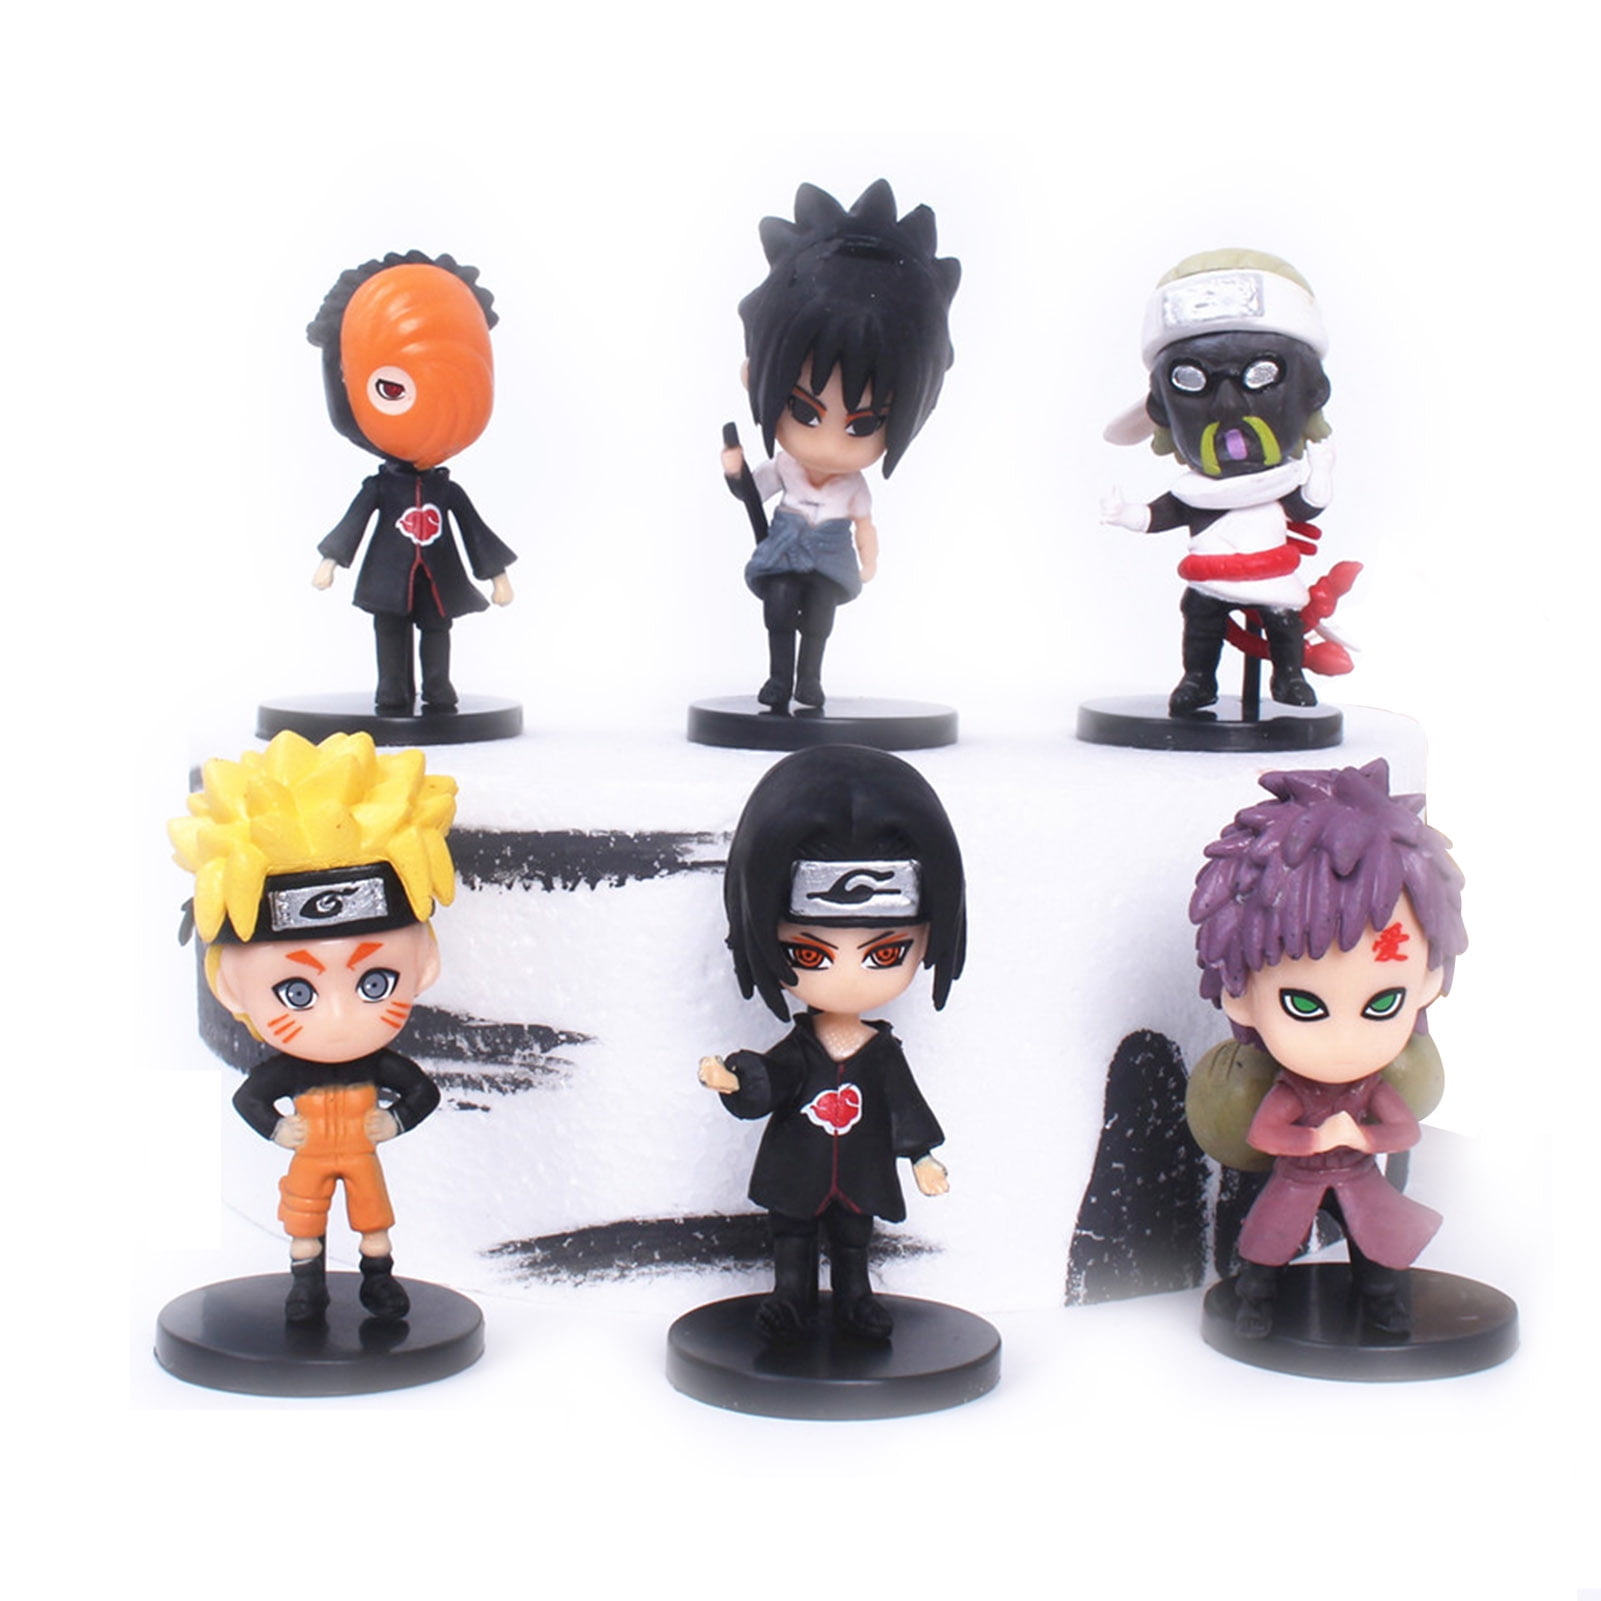 6PCS/Set Anime Naruto Itachi Gaara PVC Action Figure Collectible Toy gifts 10cm